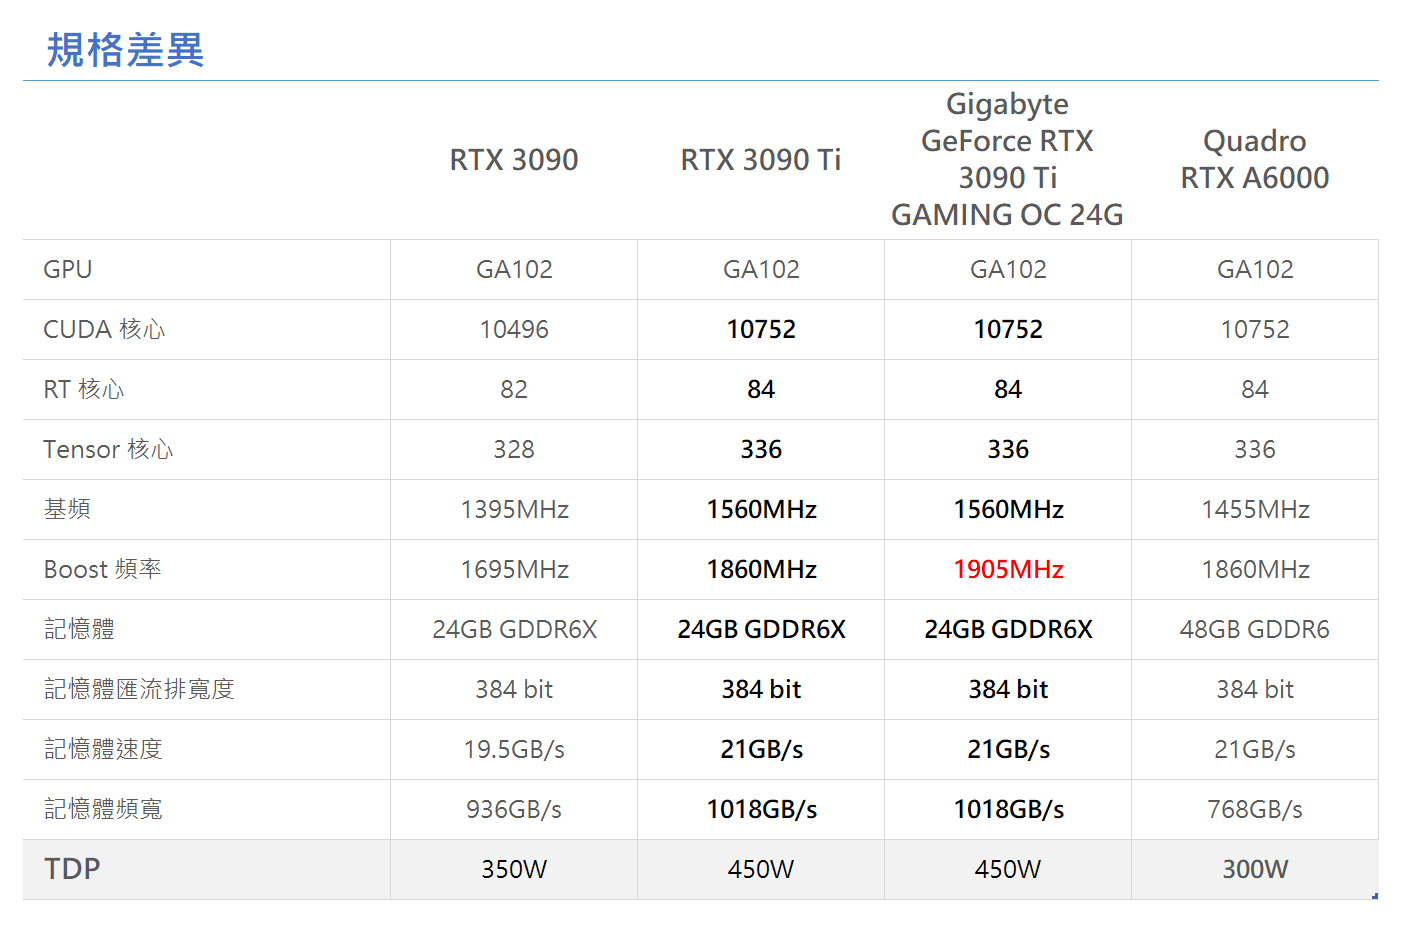 Ampere 架構最強遊戲顯示卡－GIGABYTE GeForce RTX 3090 Ti GAMING OC 24G 實測